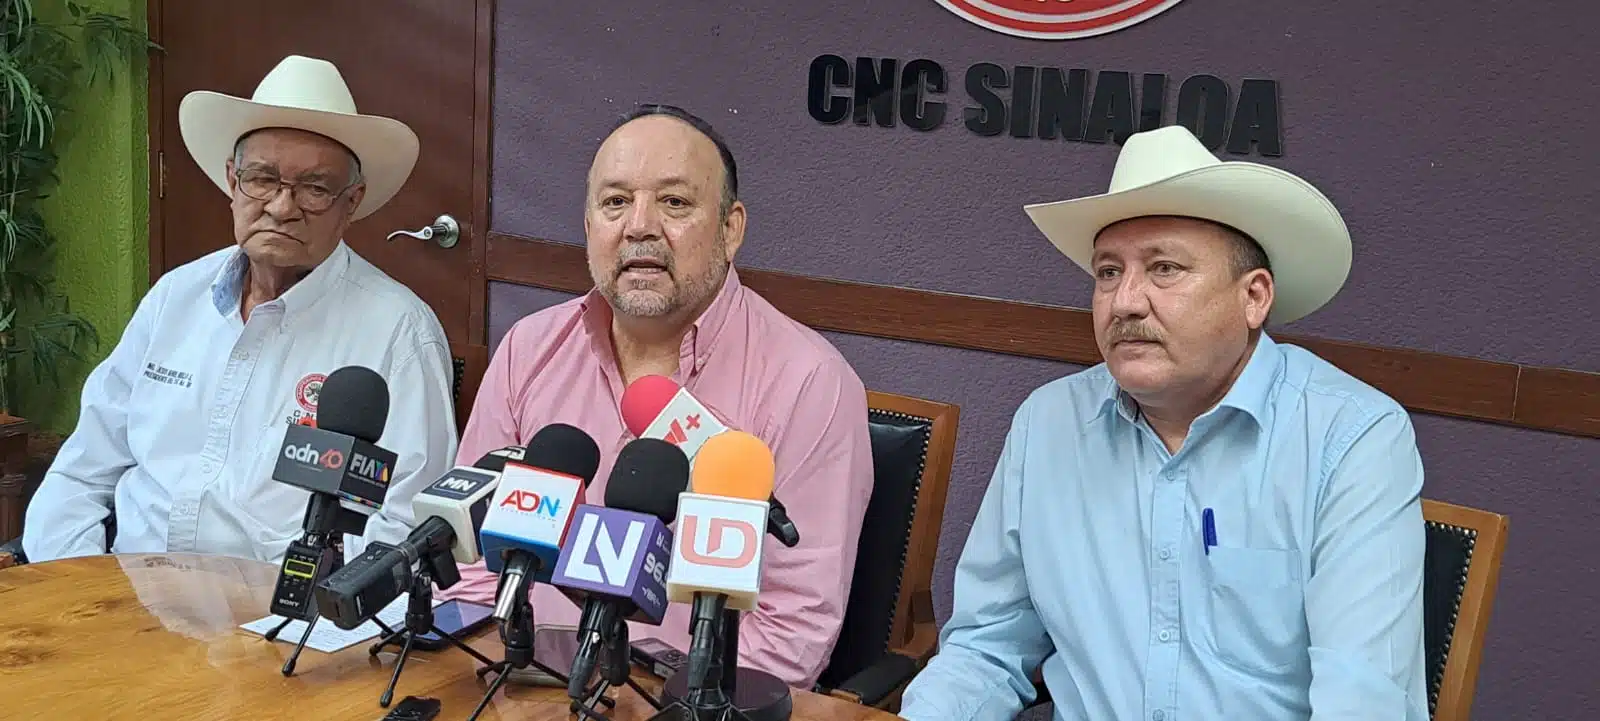 CNC Sinaloa en rueda de prensa